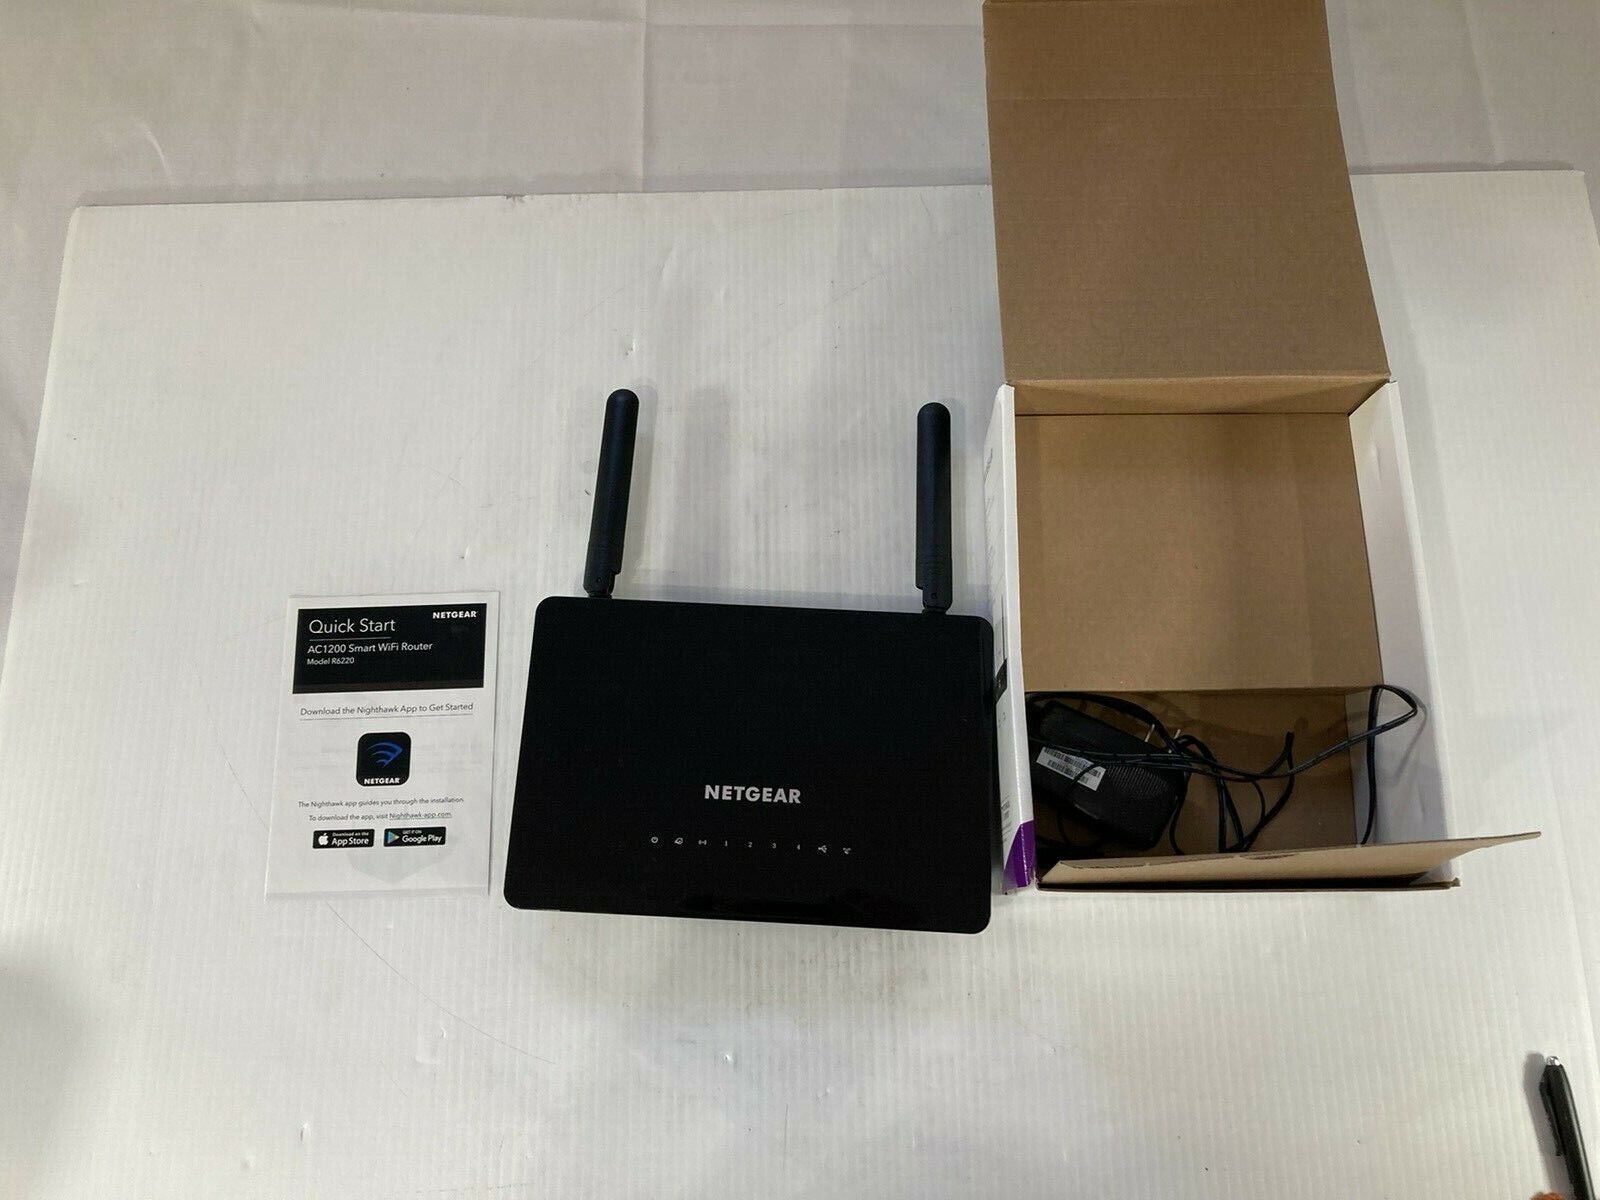 Netgear AC1200 Smart WiFi Router